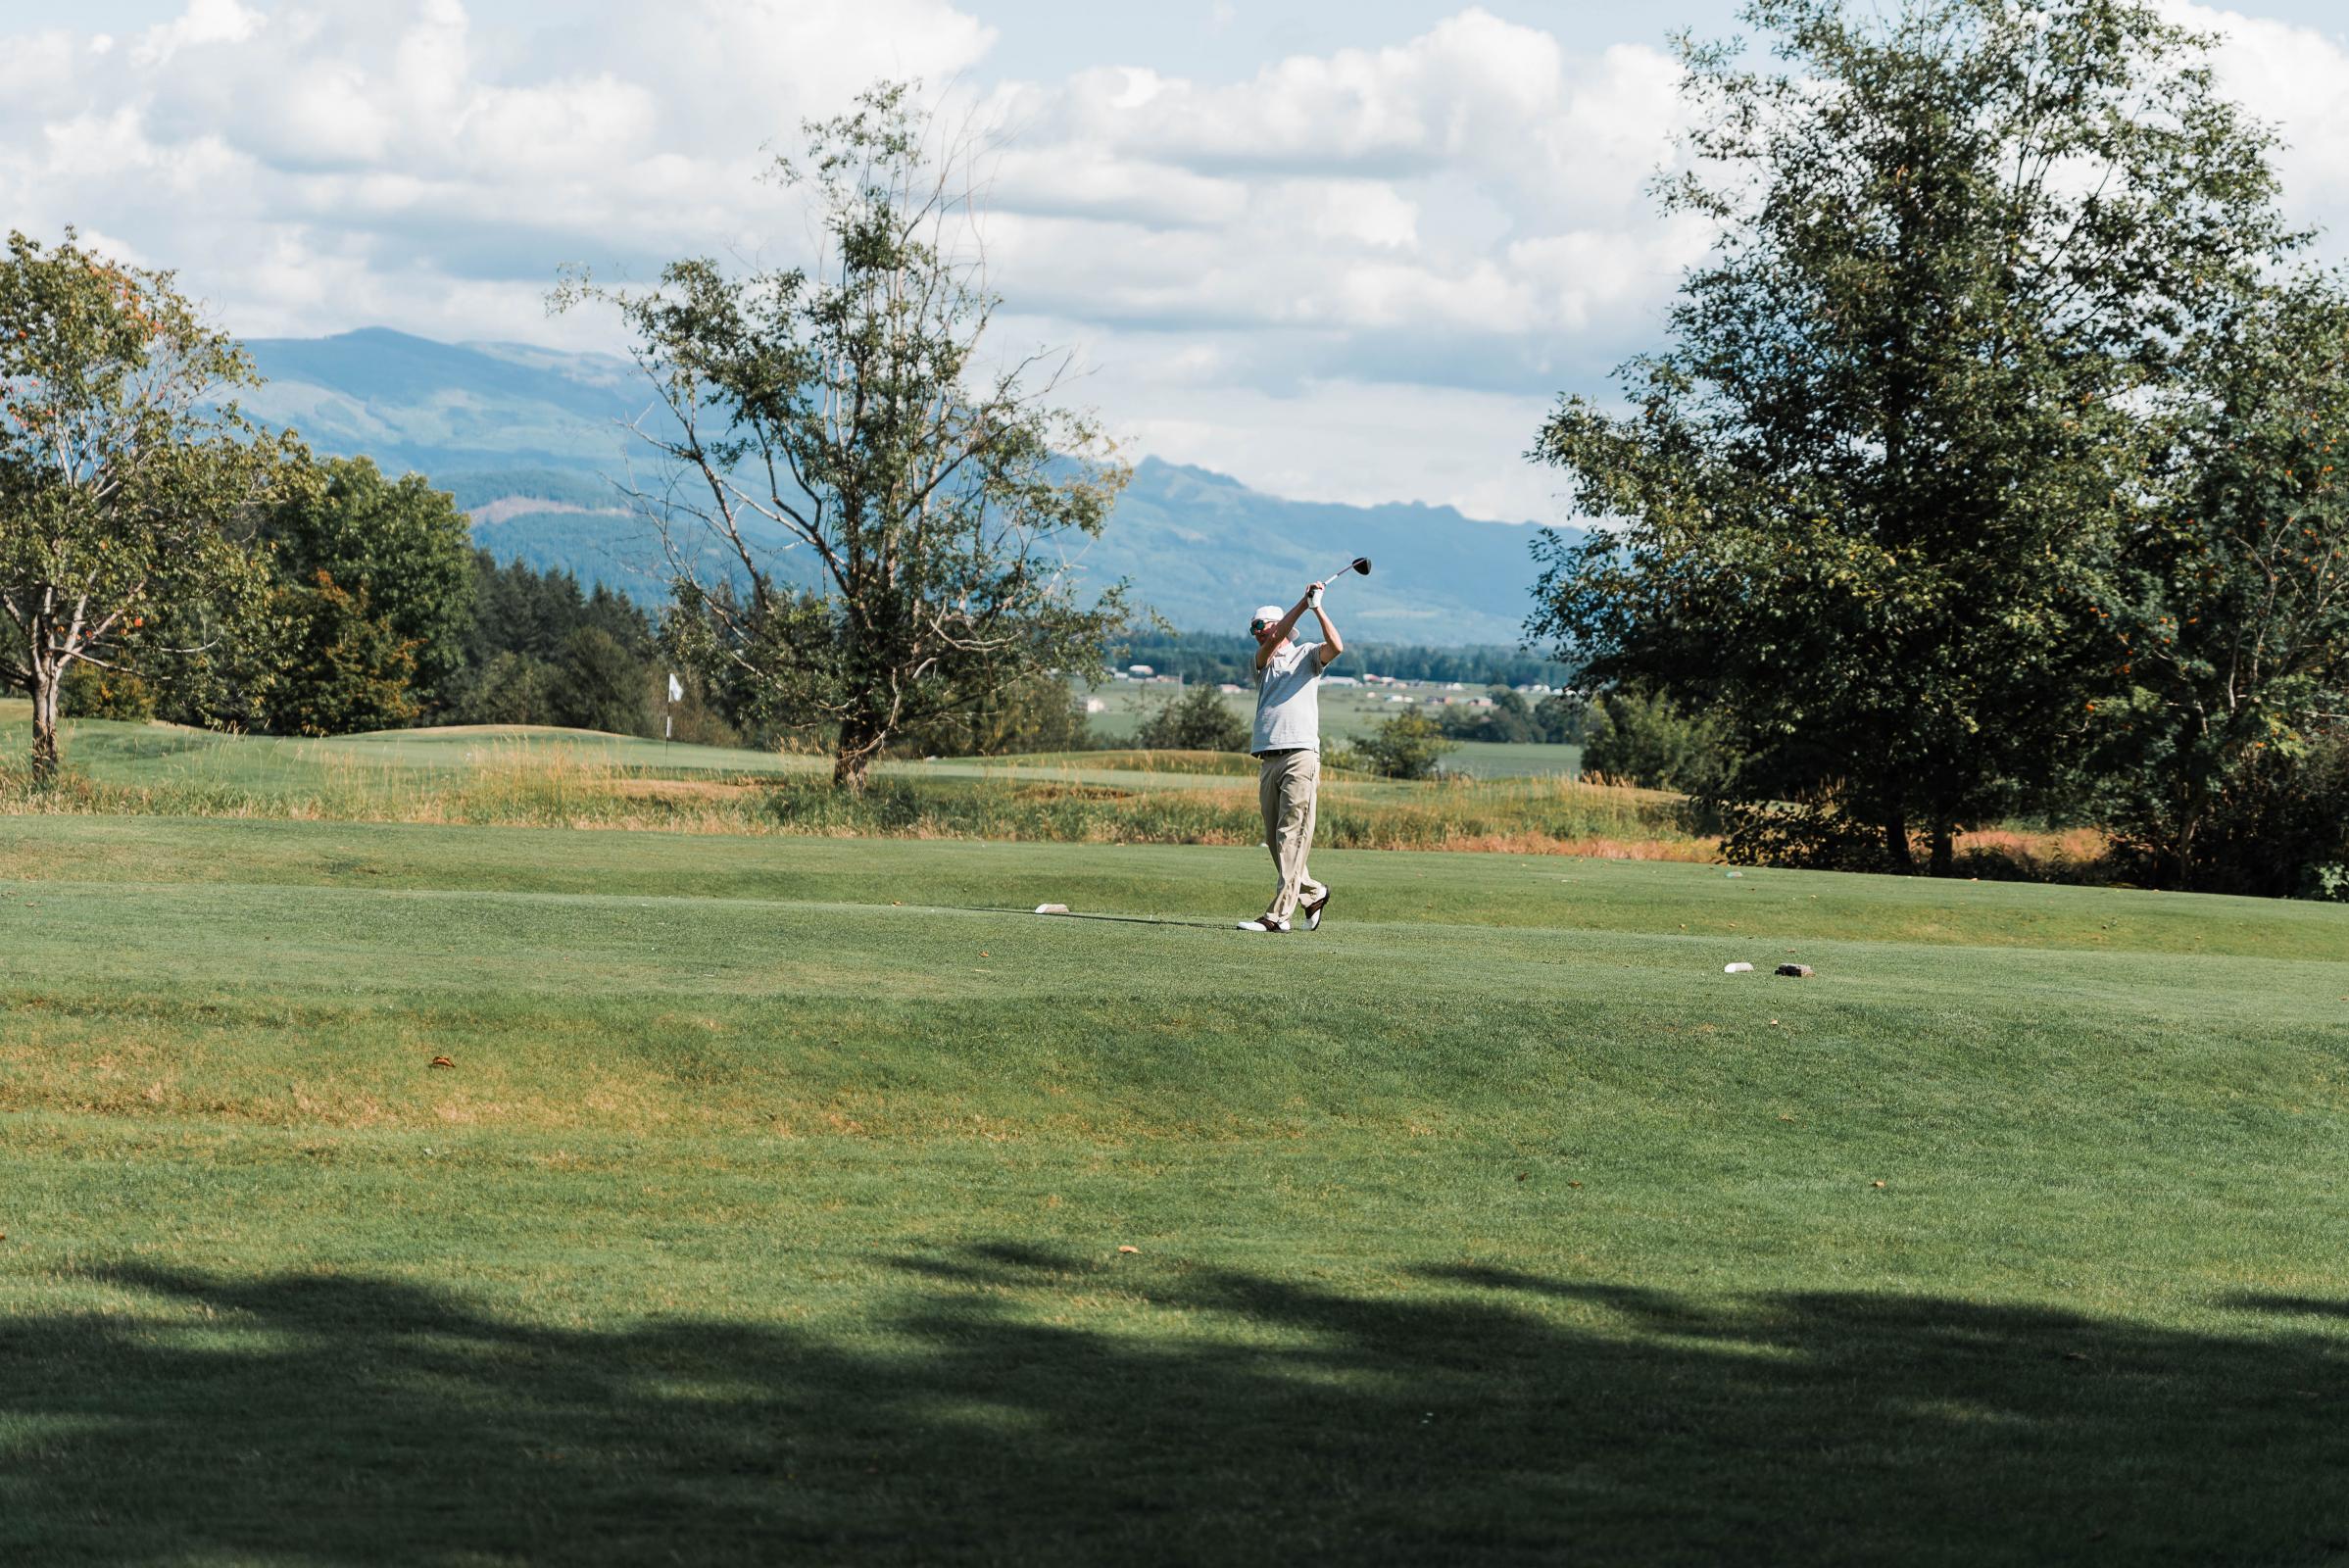 GolfTournament-91's image